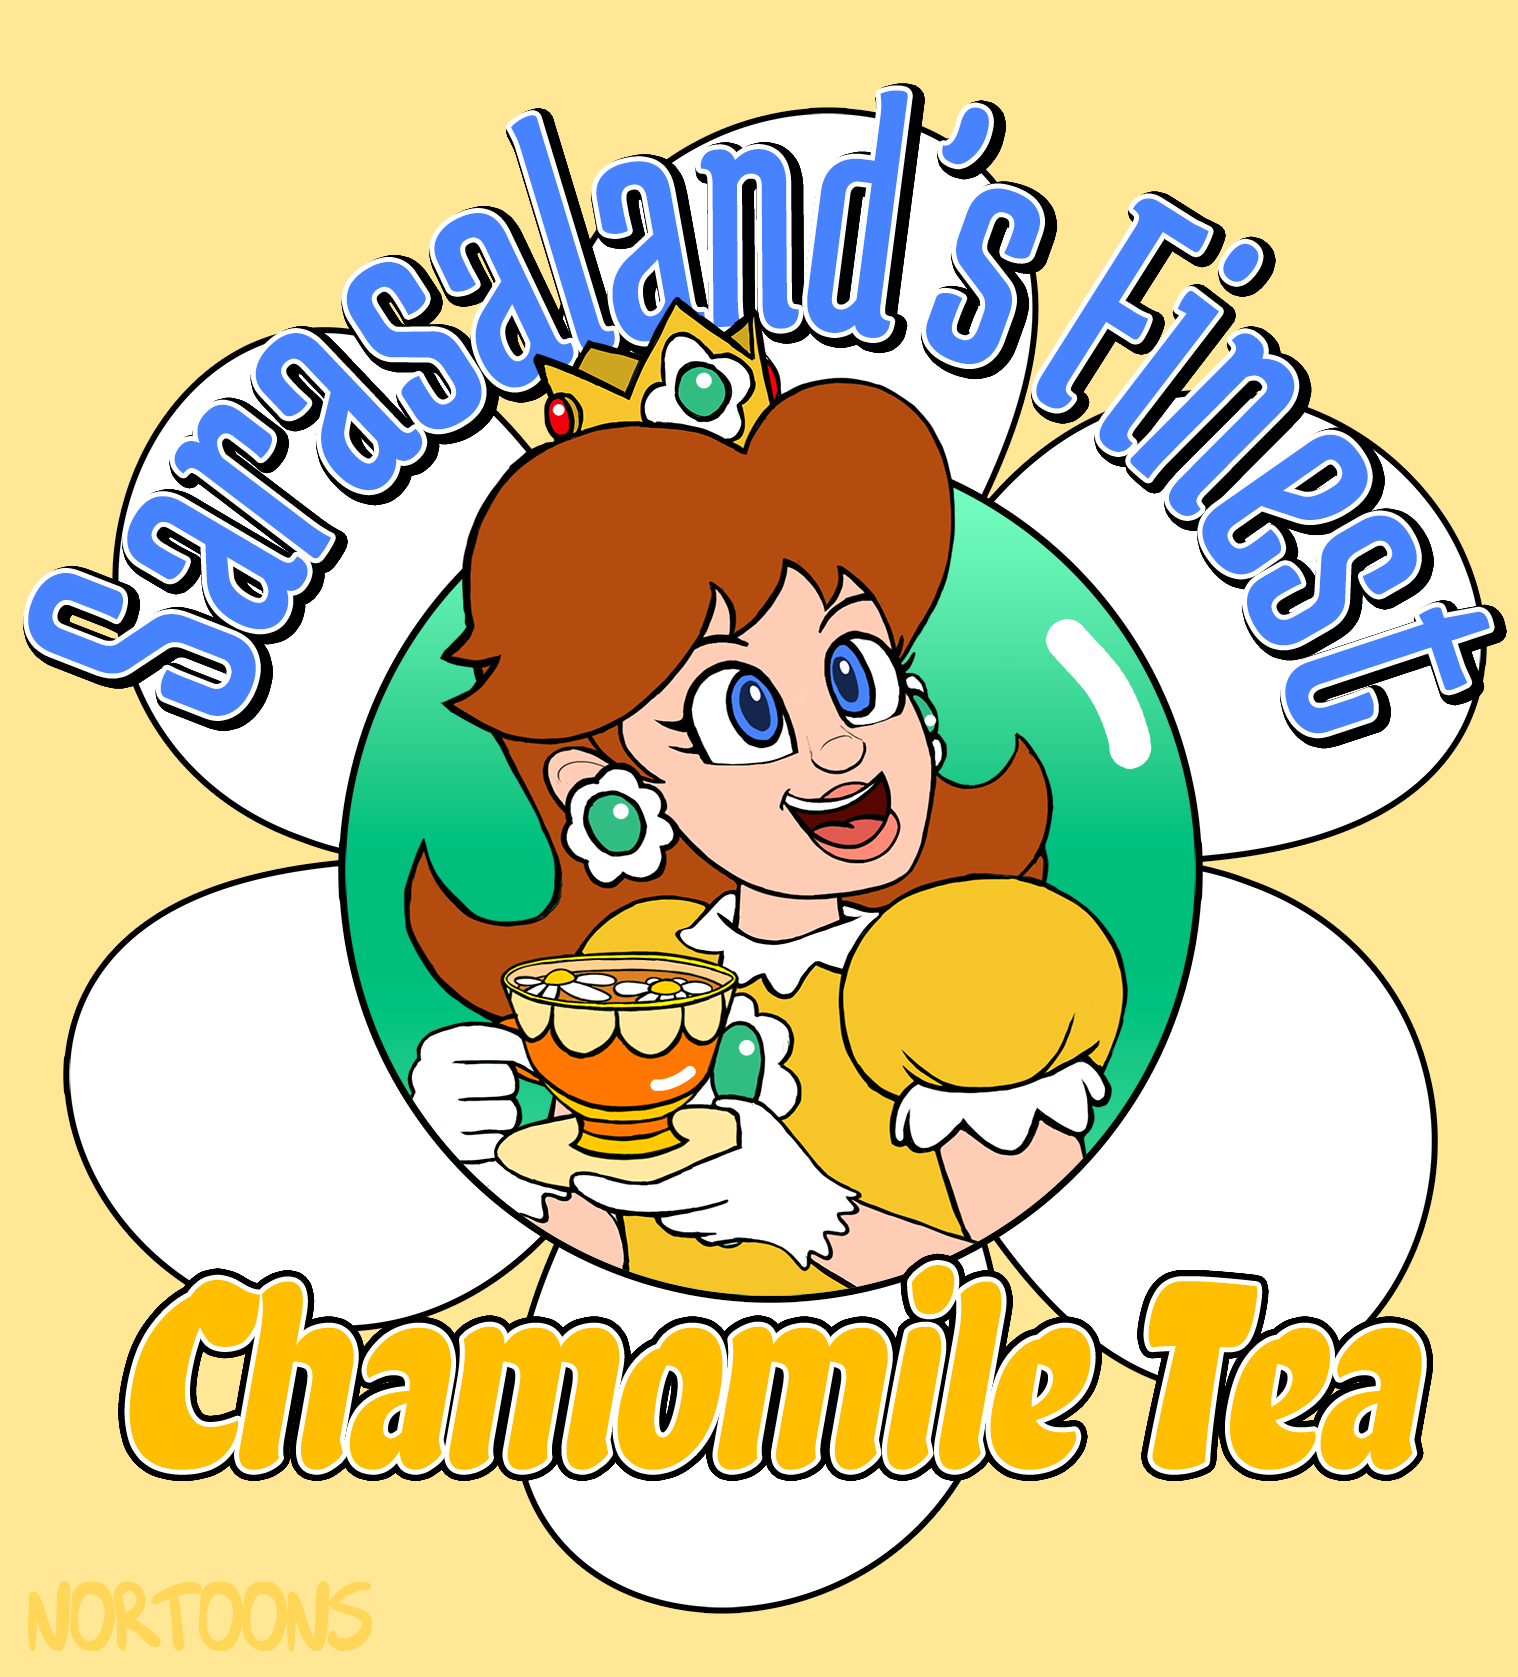 Sarasaland's finest Chamomile Tea feat. Princess Daisy